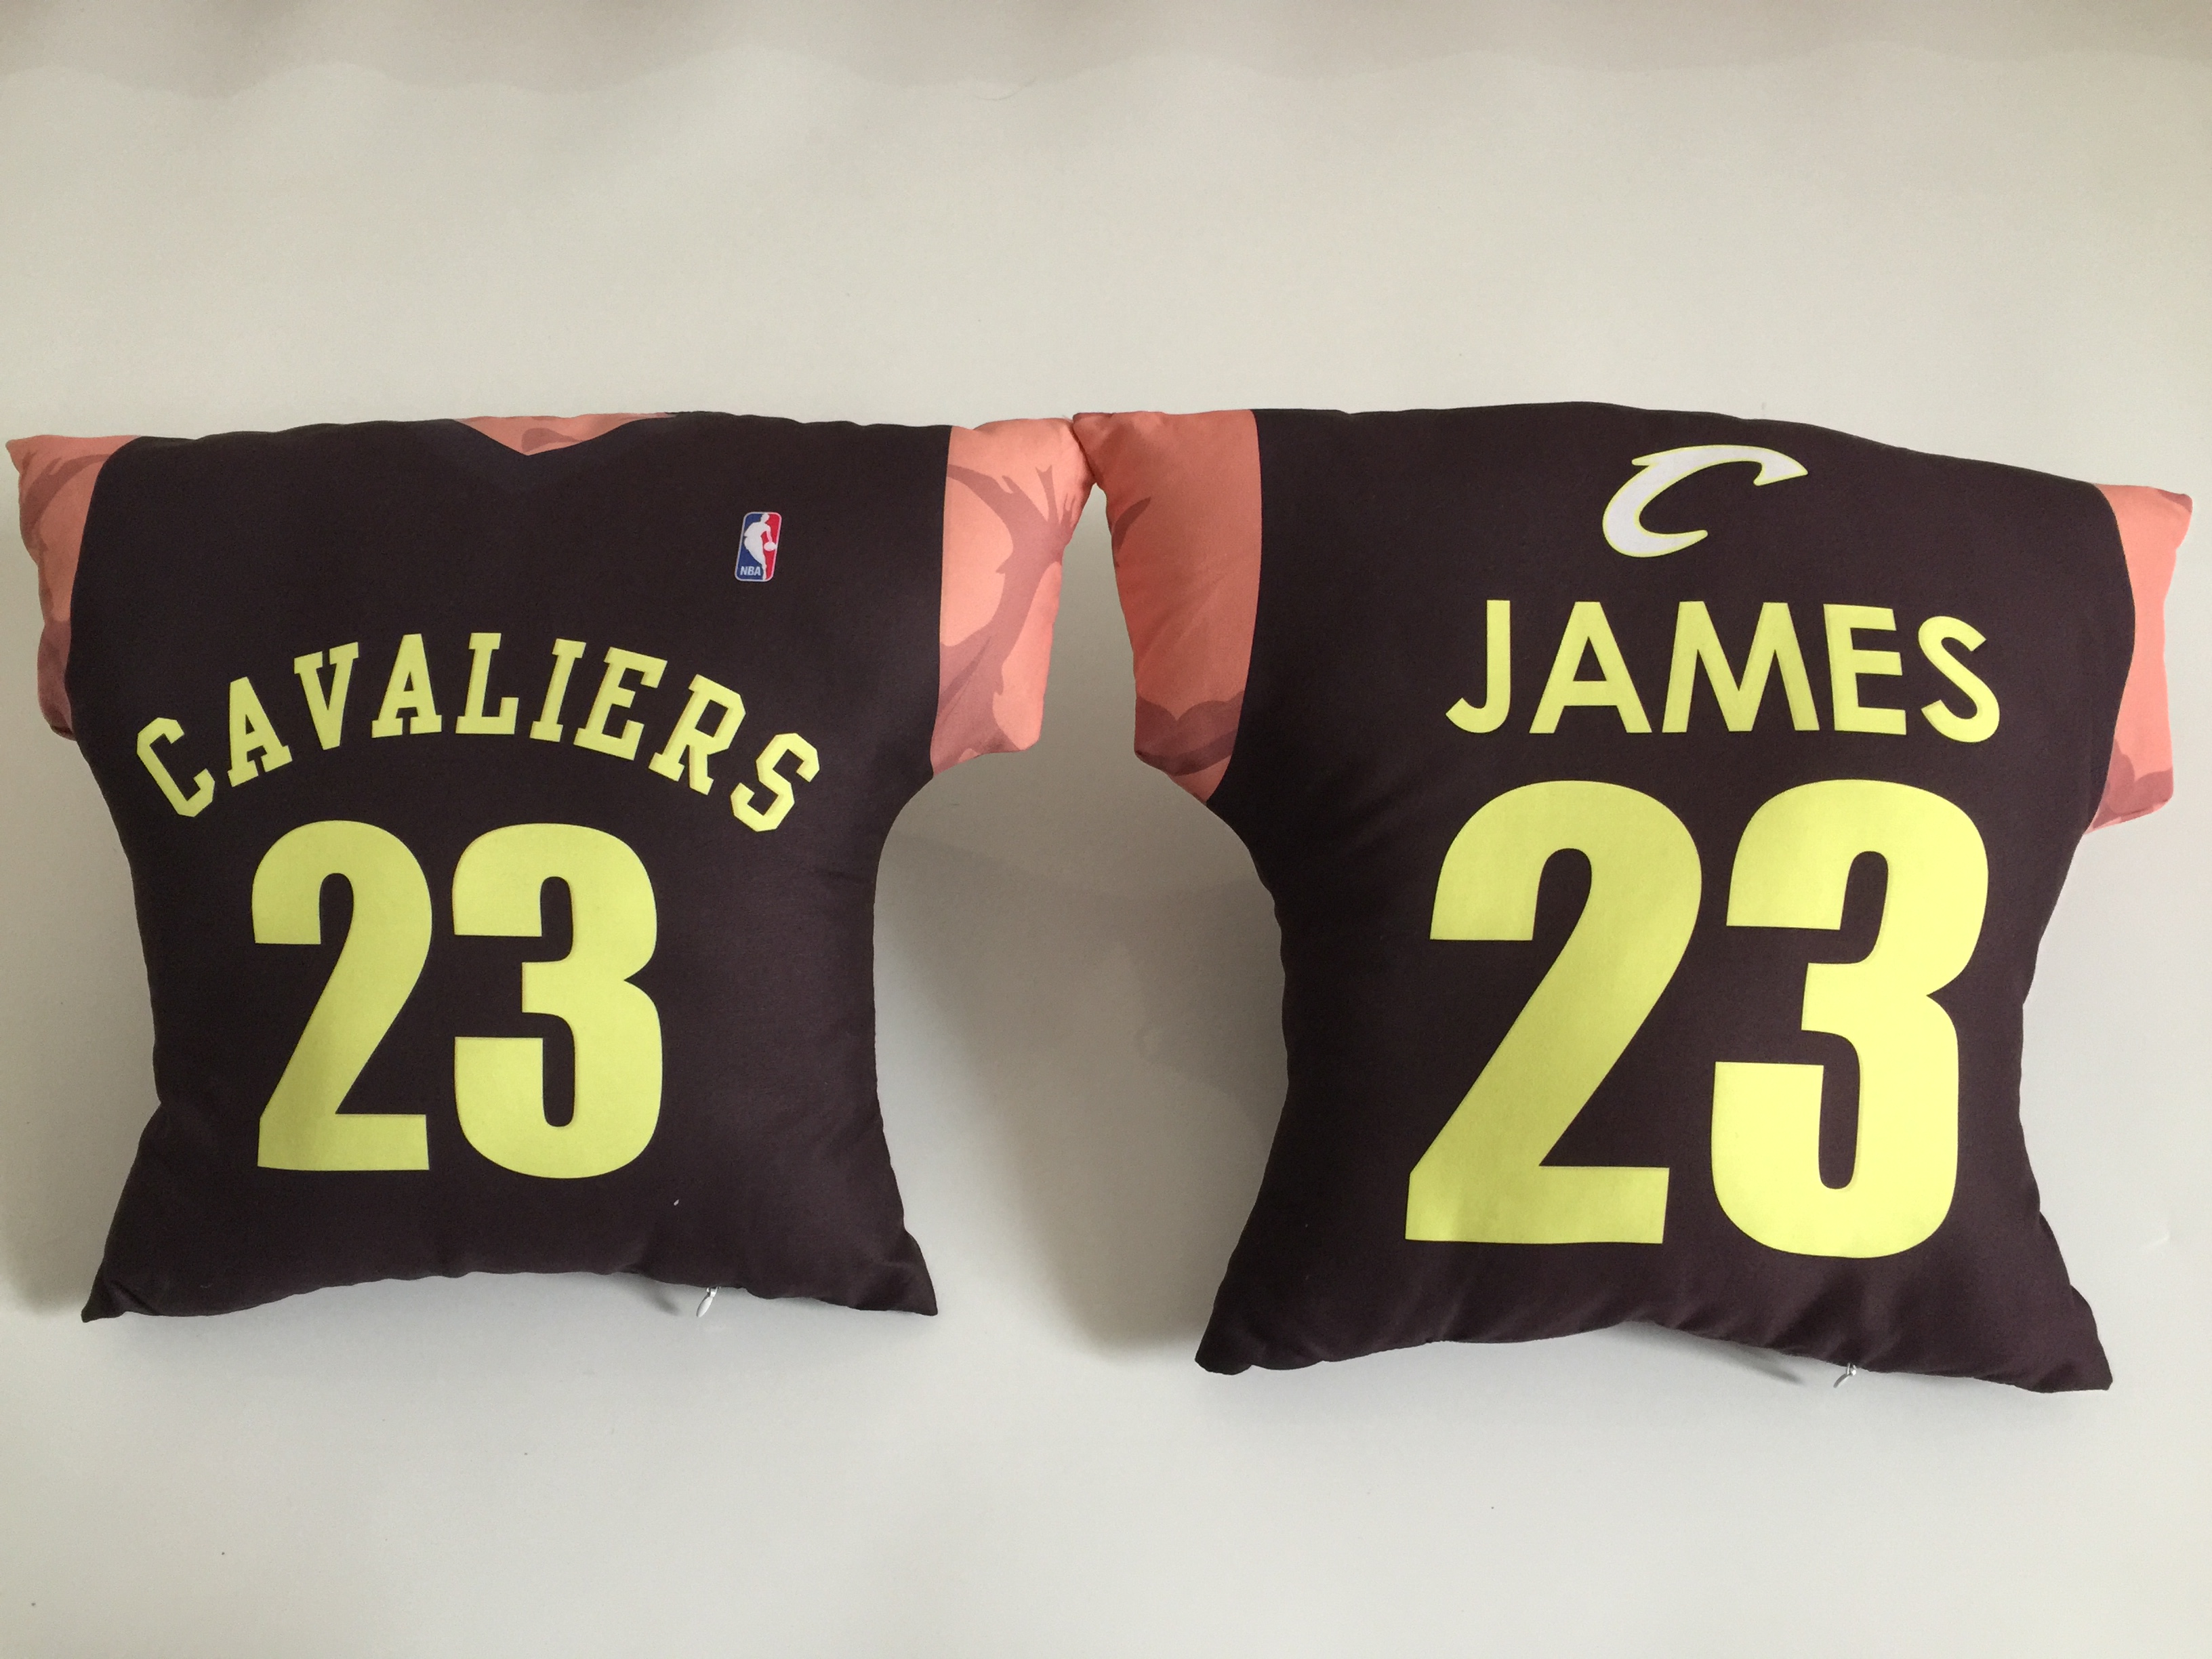 Cleveland Cavaliers 23 LeBron James Black Throwback NBA Pillow